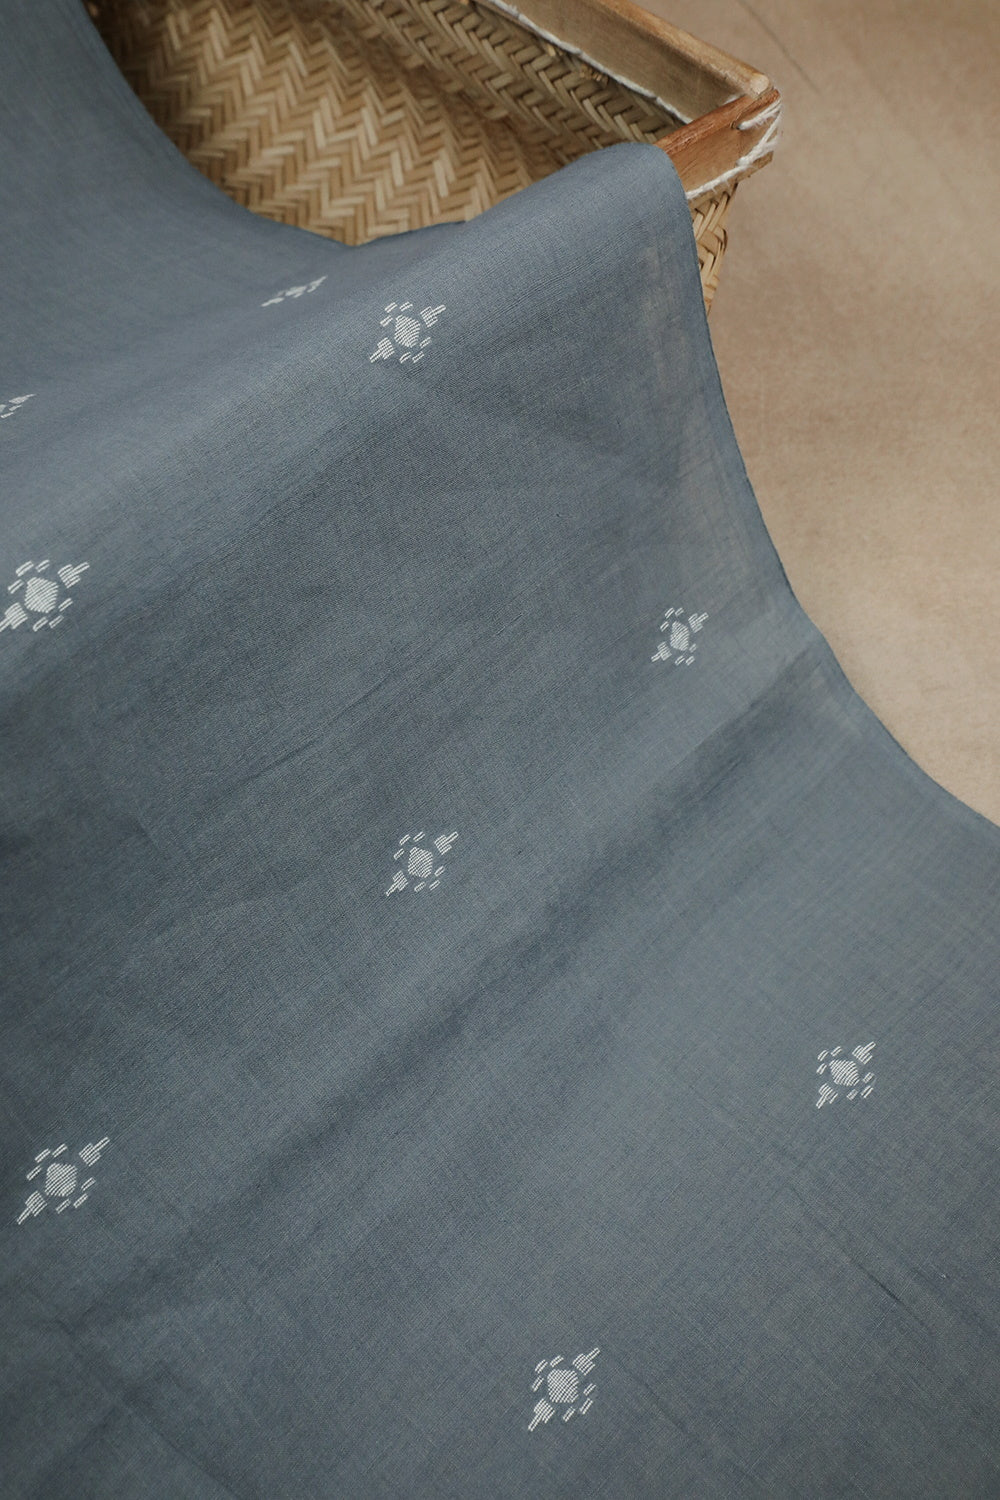 Butta on Grey Jamdani Cotton Fabric - 0.5m